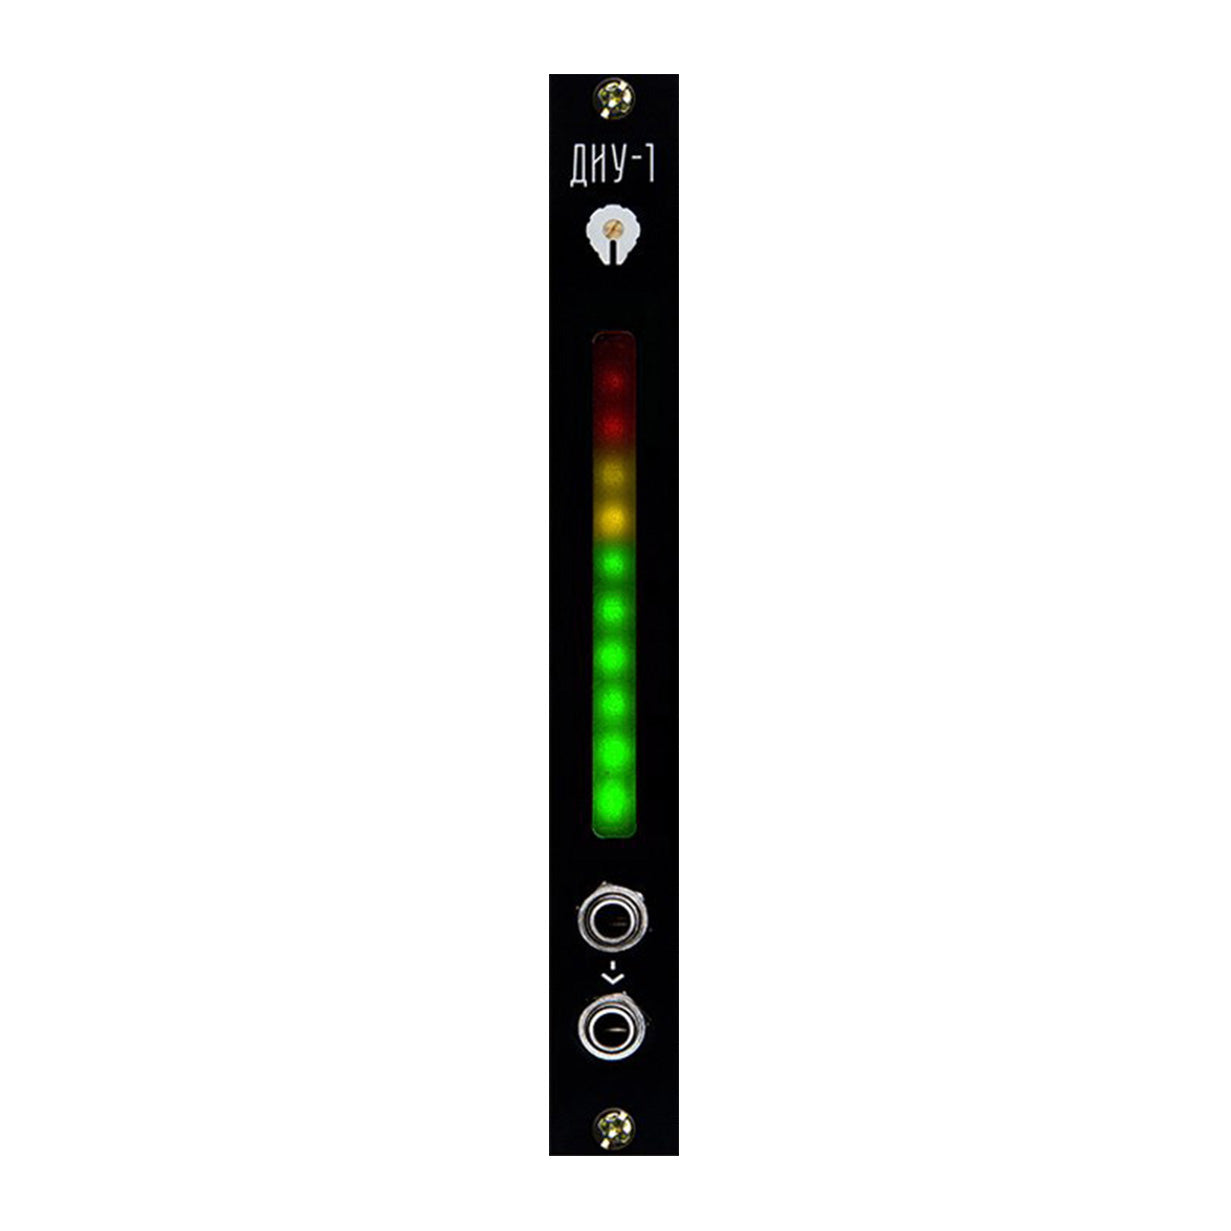 Paratek ДИУ-1к (DIU-1K) Green/Yellow/Red LED VU meter